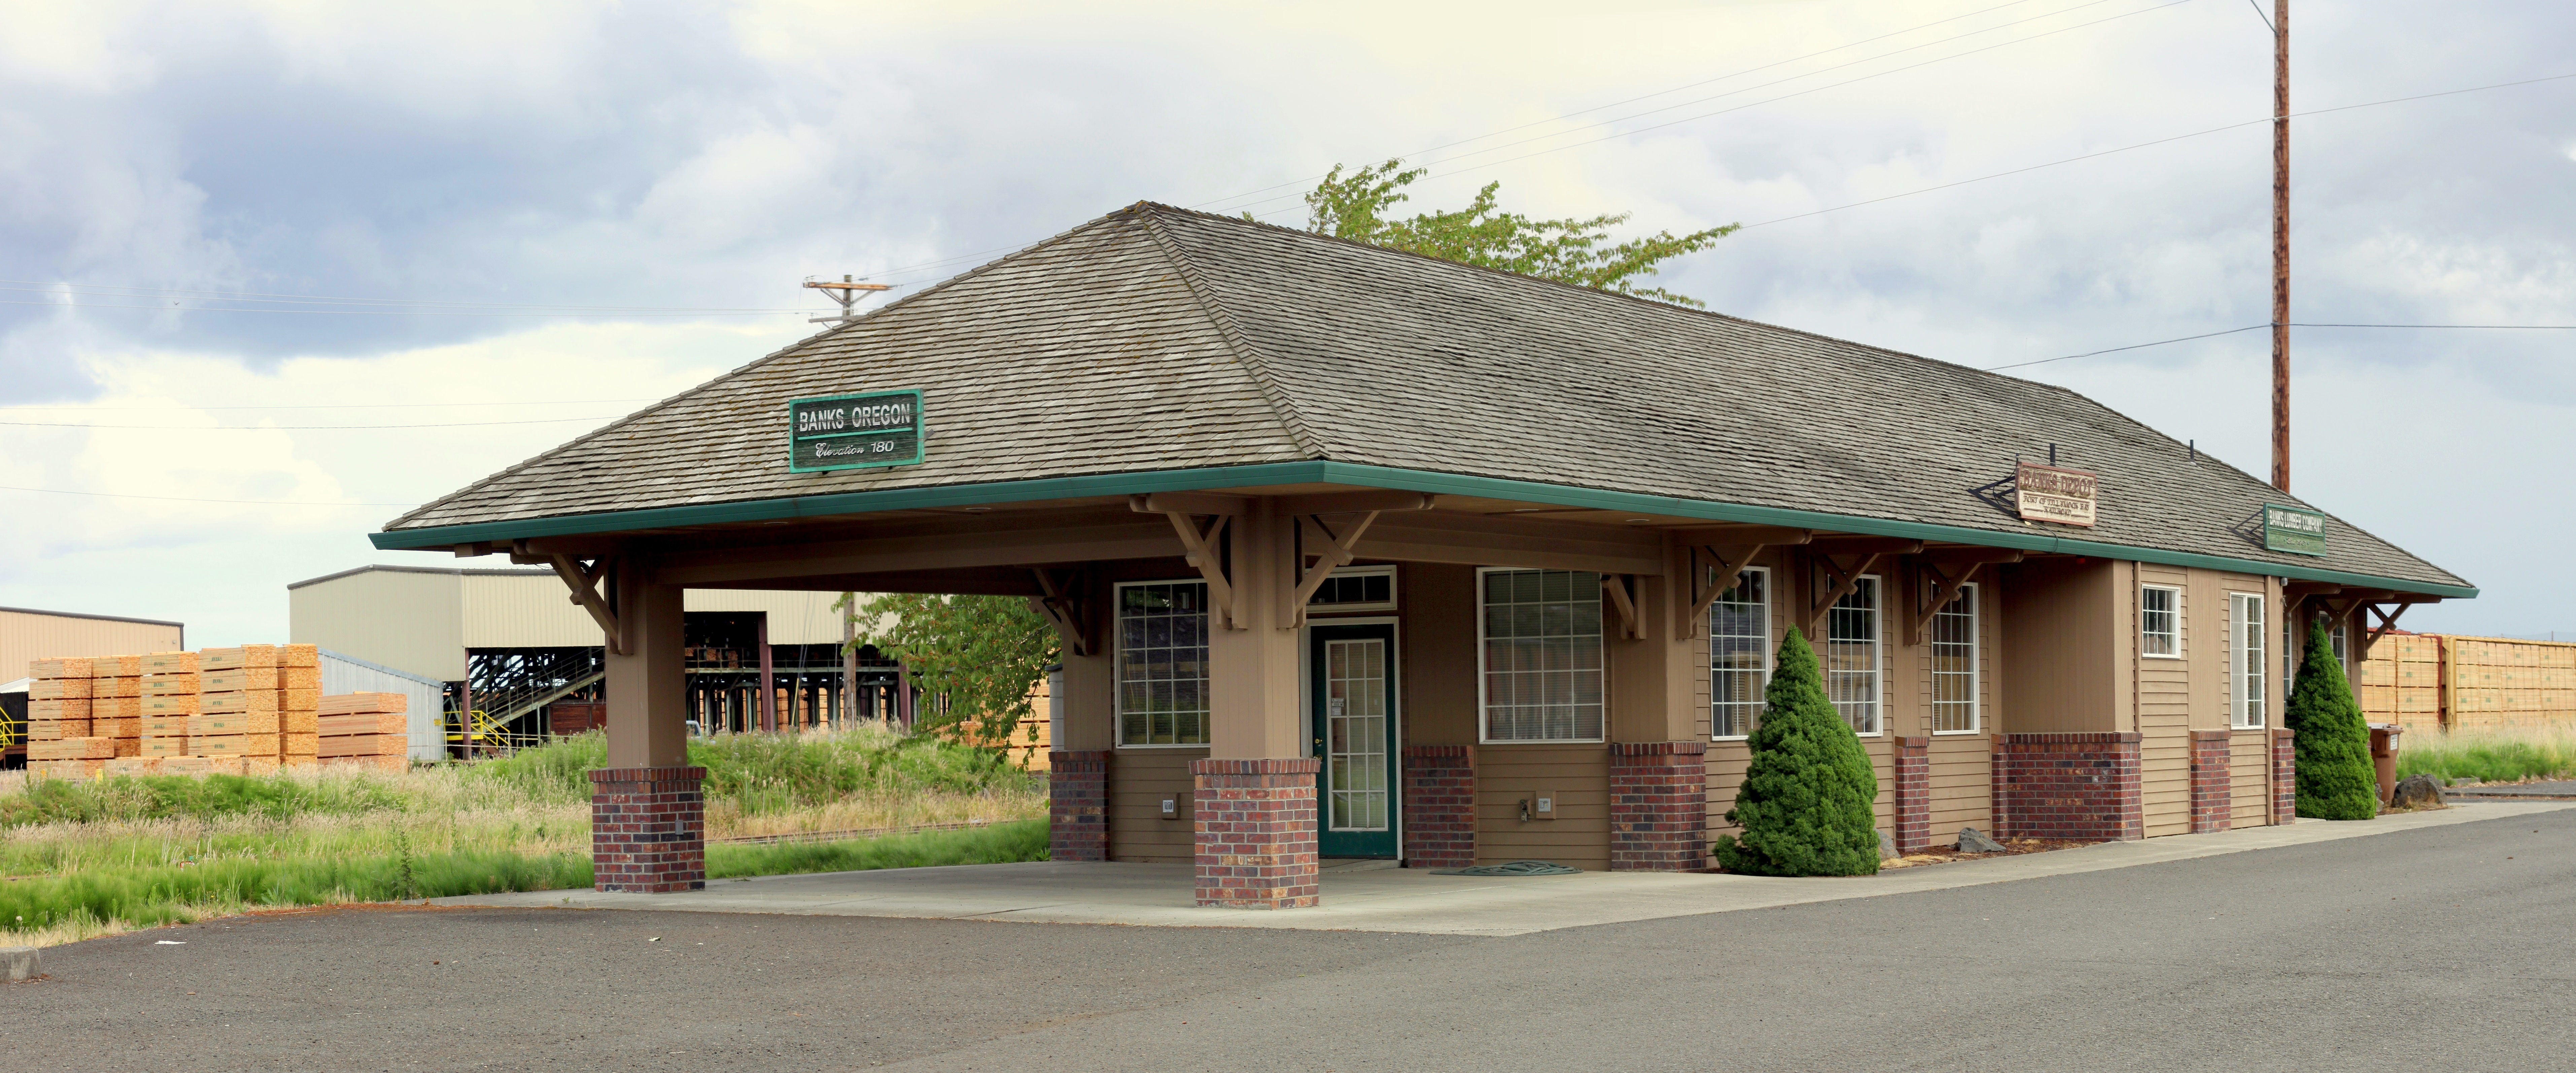 Train banks. Адамс (округ, Вашингтон). СС Орегон. Glenwood, Washington County, Oregon. Property Management Tualatin Oregon.